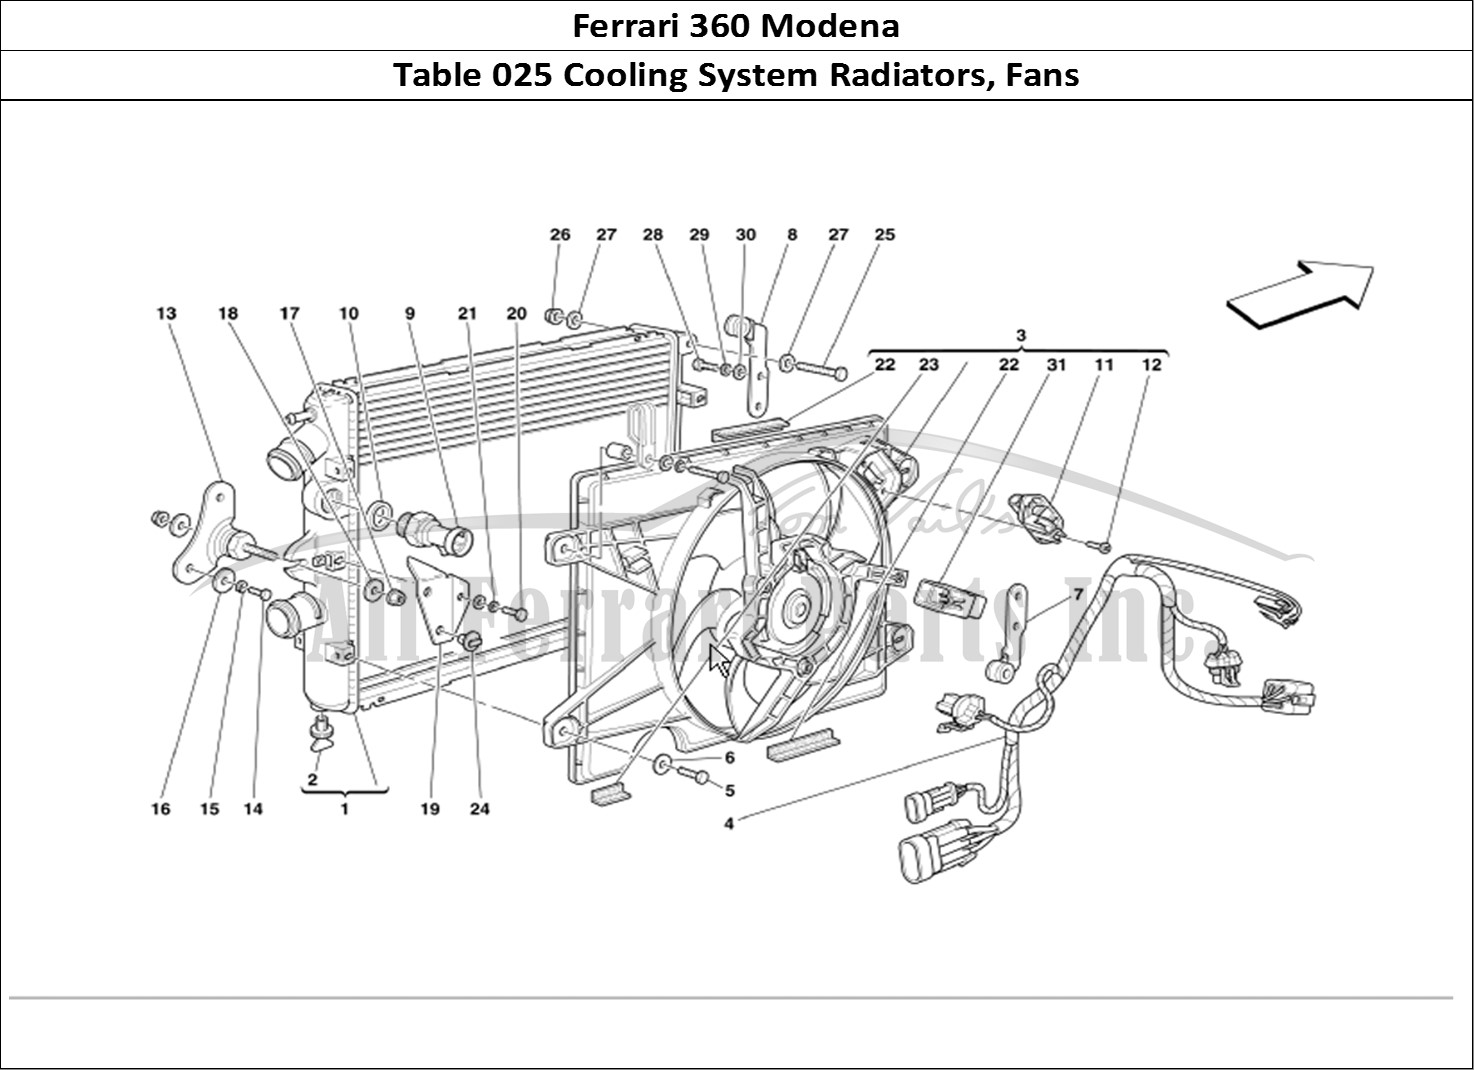 Ferrari Parts Ferrari 360 Modena Page 025 Cooling System Radiators